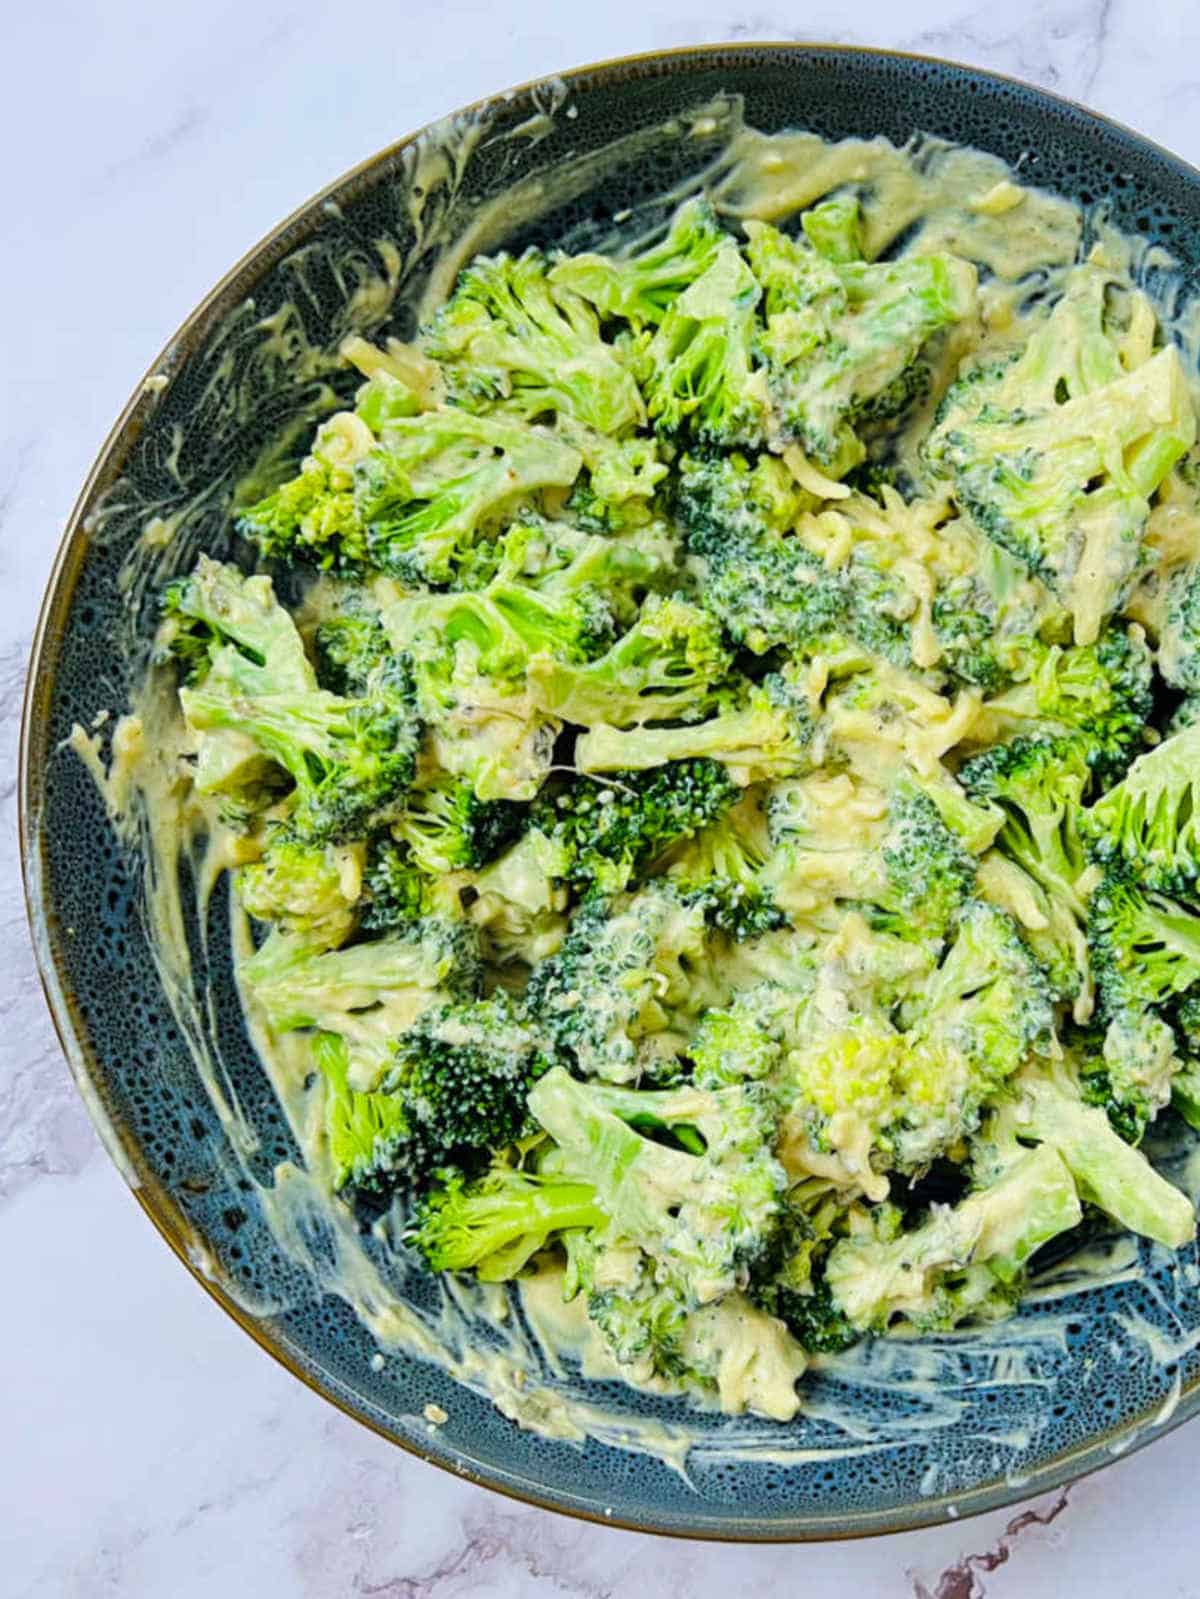 Marinated broccoli florets in a grey bowl.